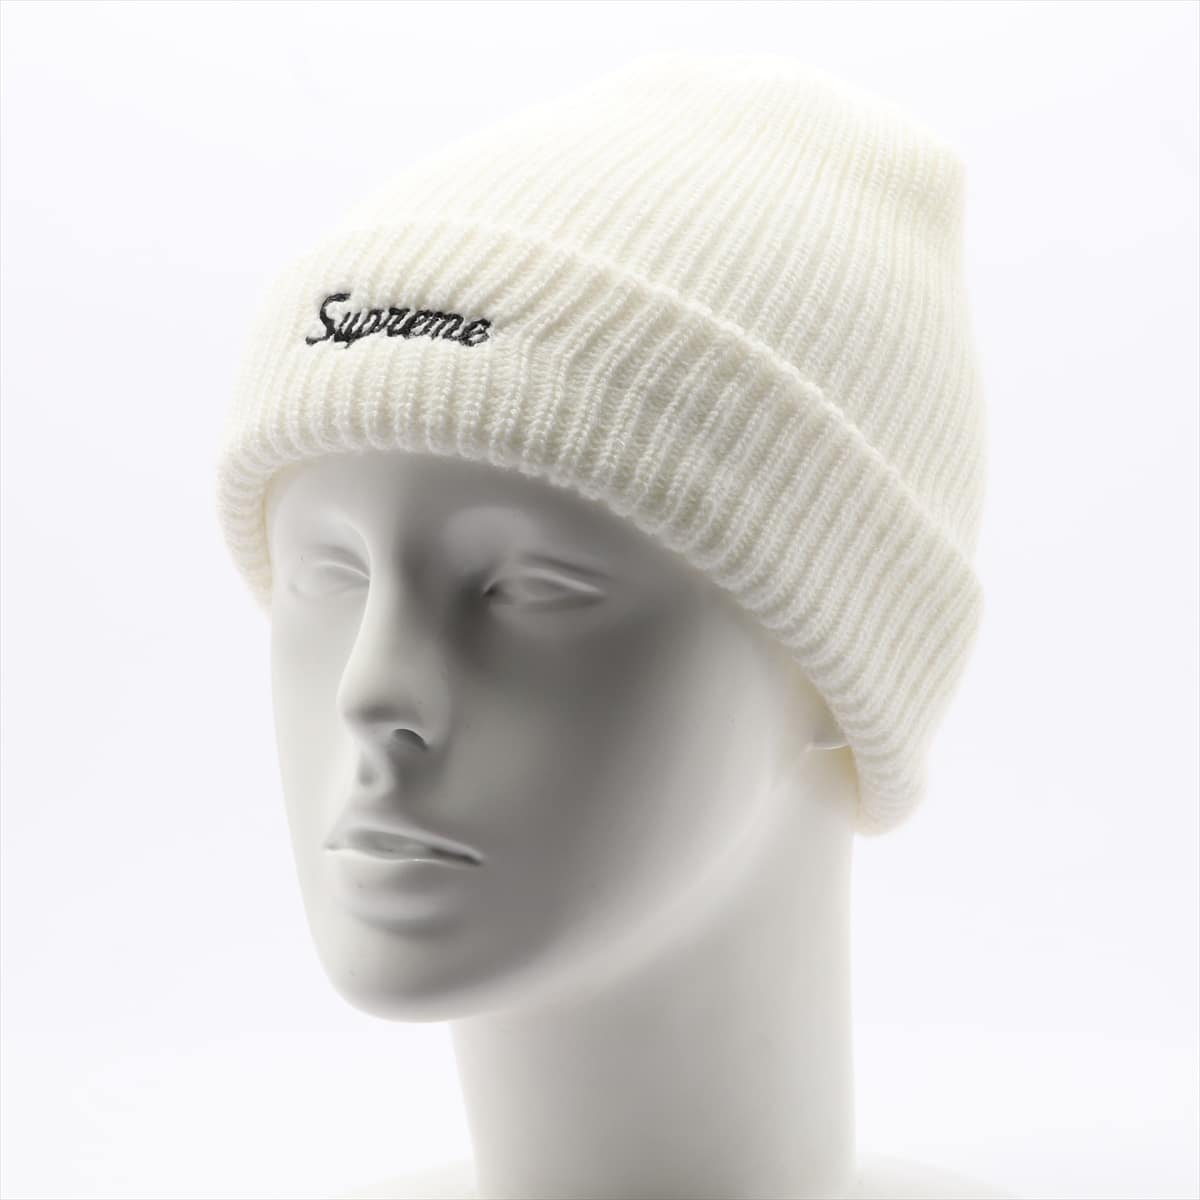 Supreme Knit cap Acrylic White Logo embroidery